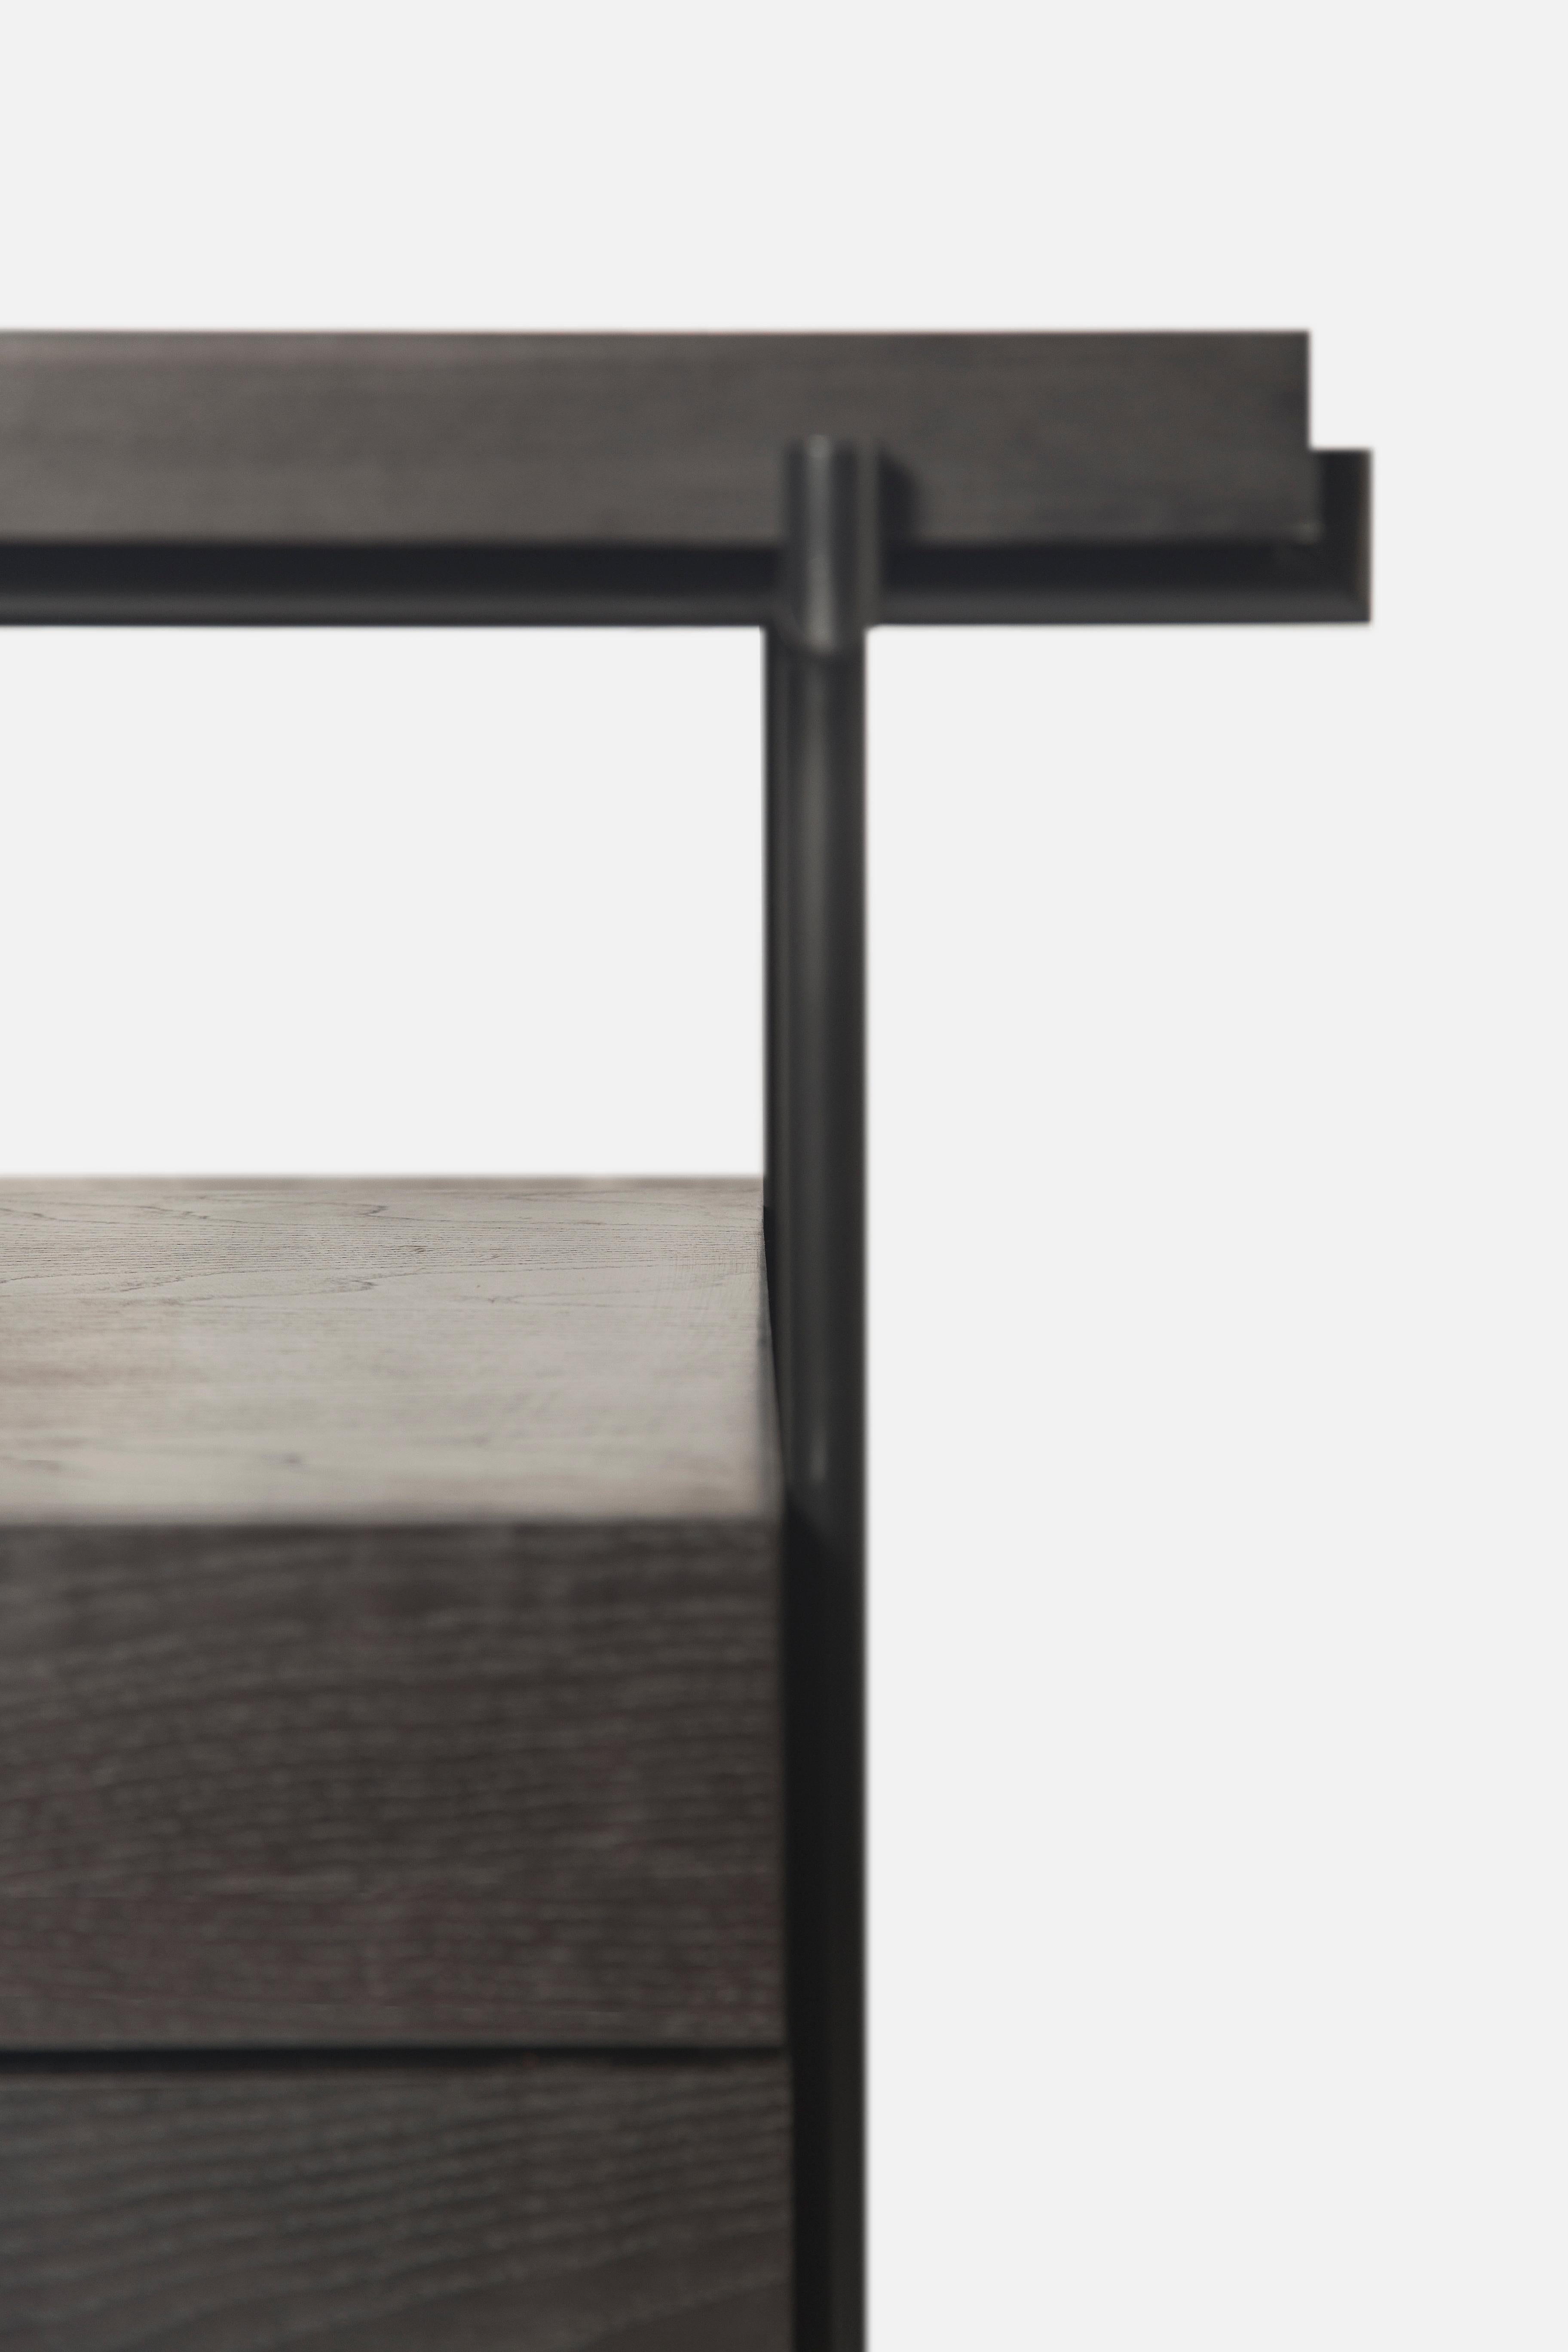 Laminated Black Desk Files Drawers Wood metal, Mid-Century Modern style inspired